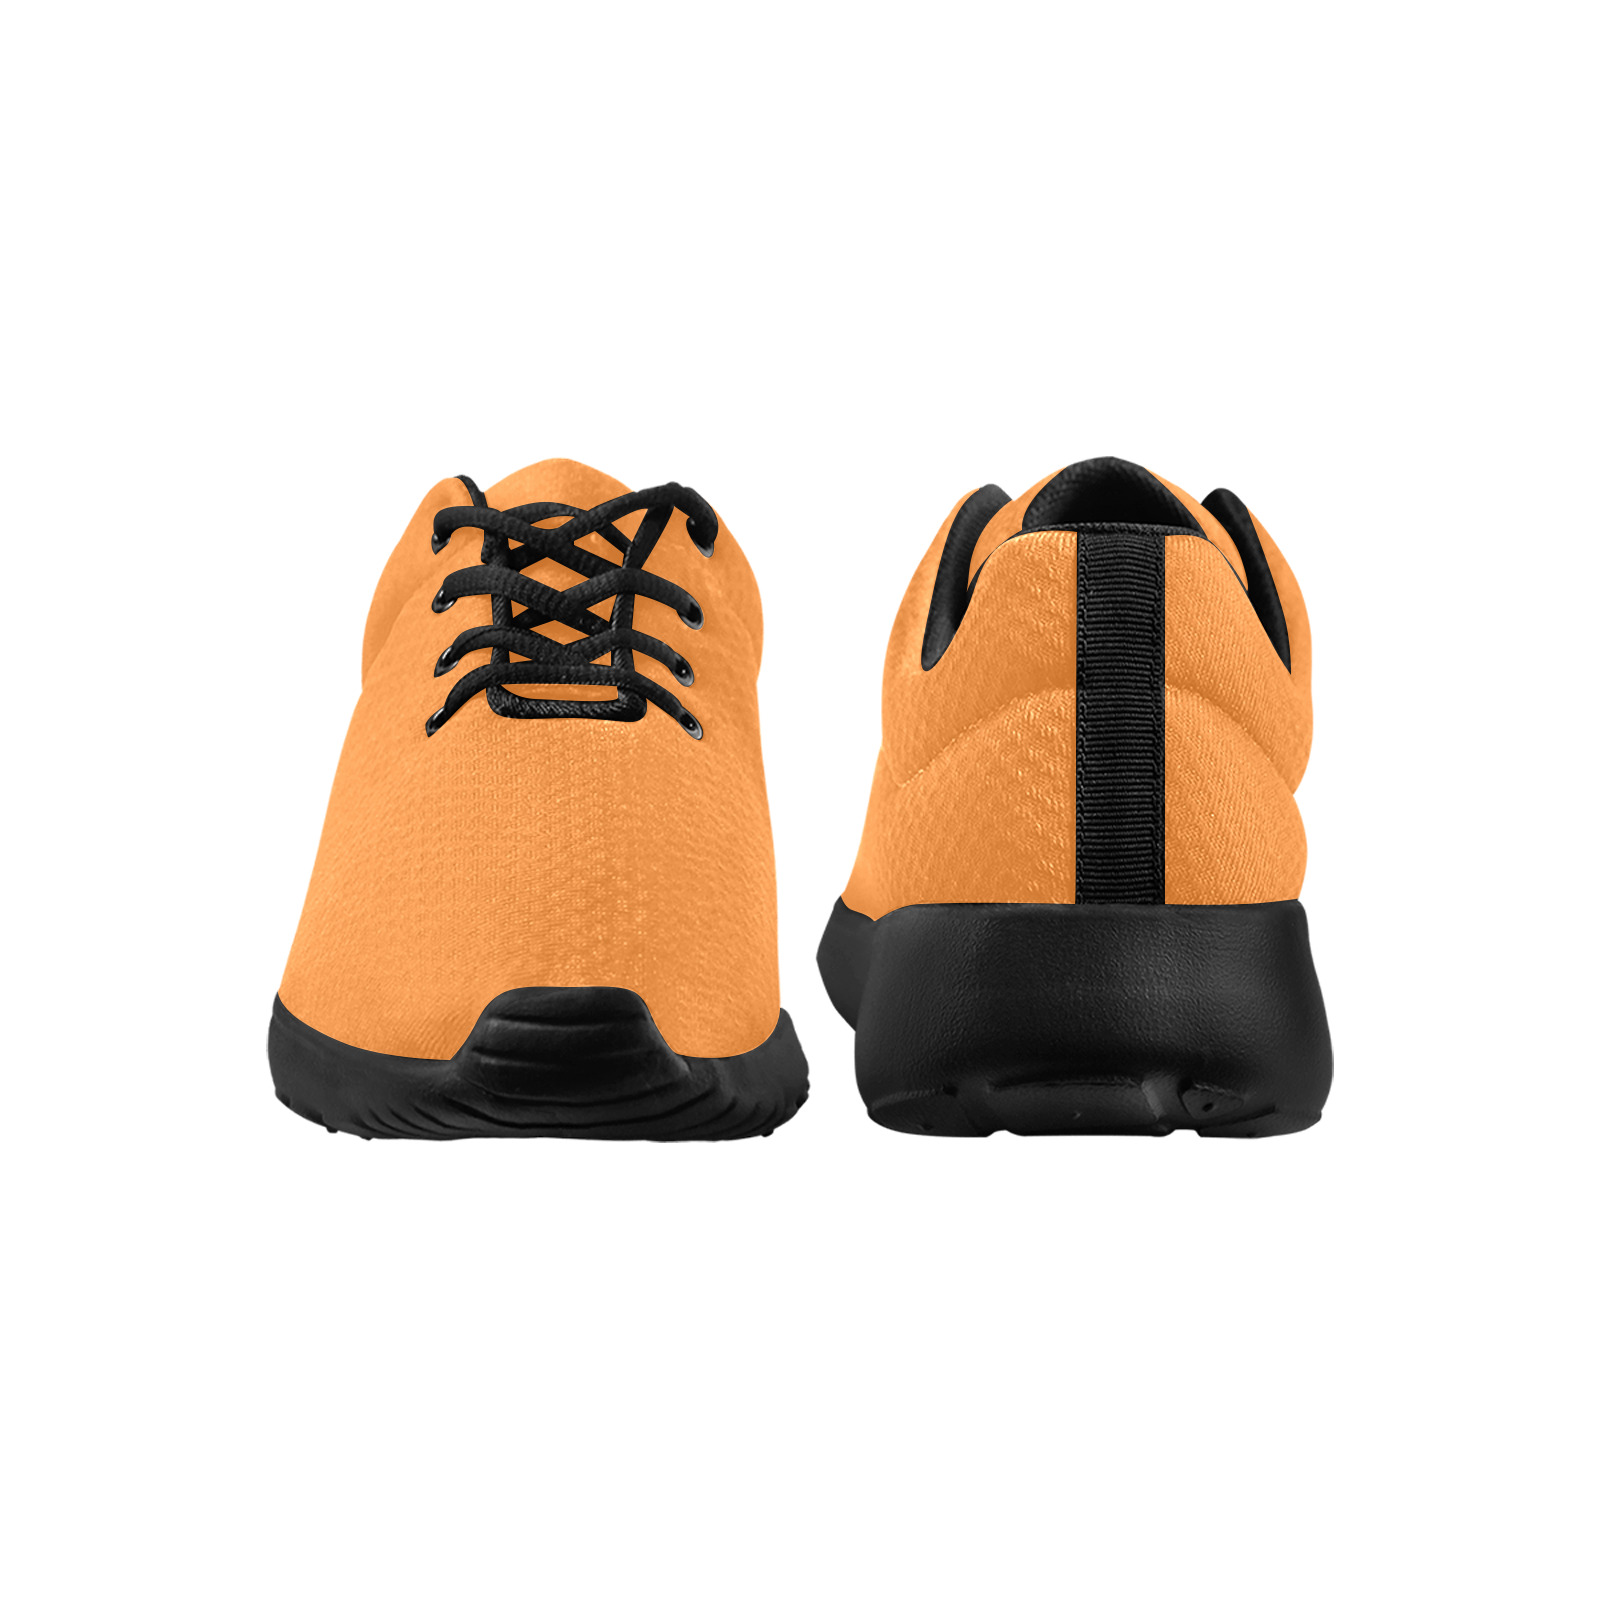 orange Women's Athletic Shoes (Model 0200)